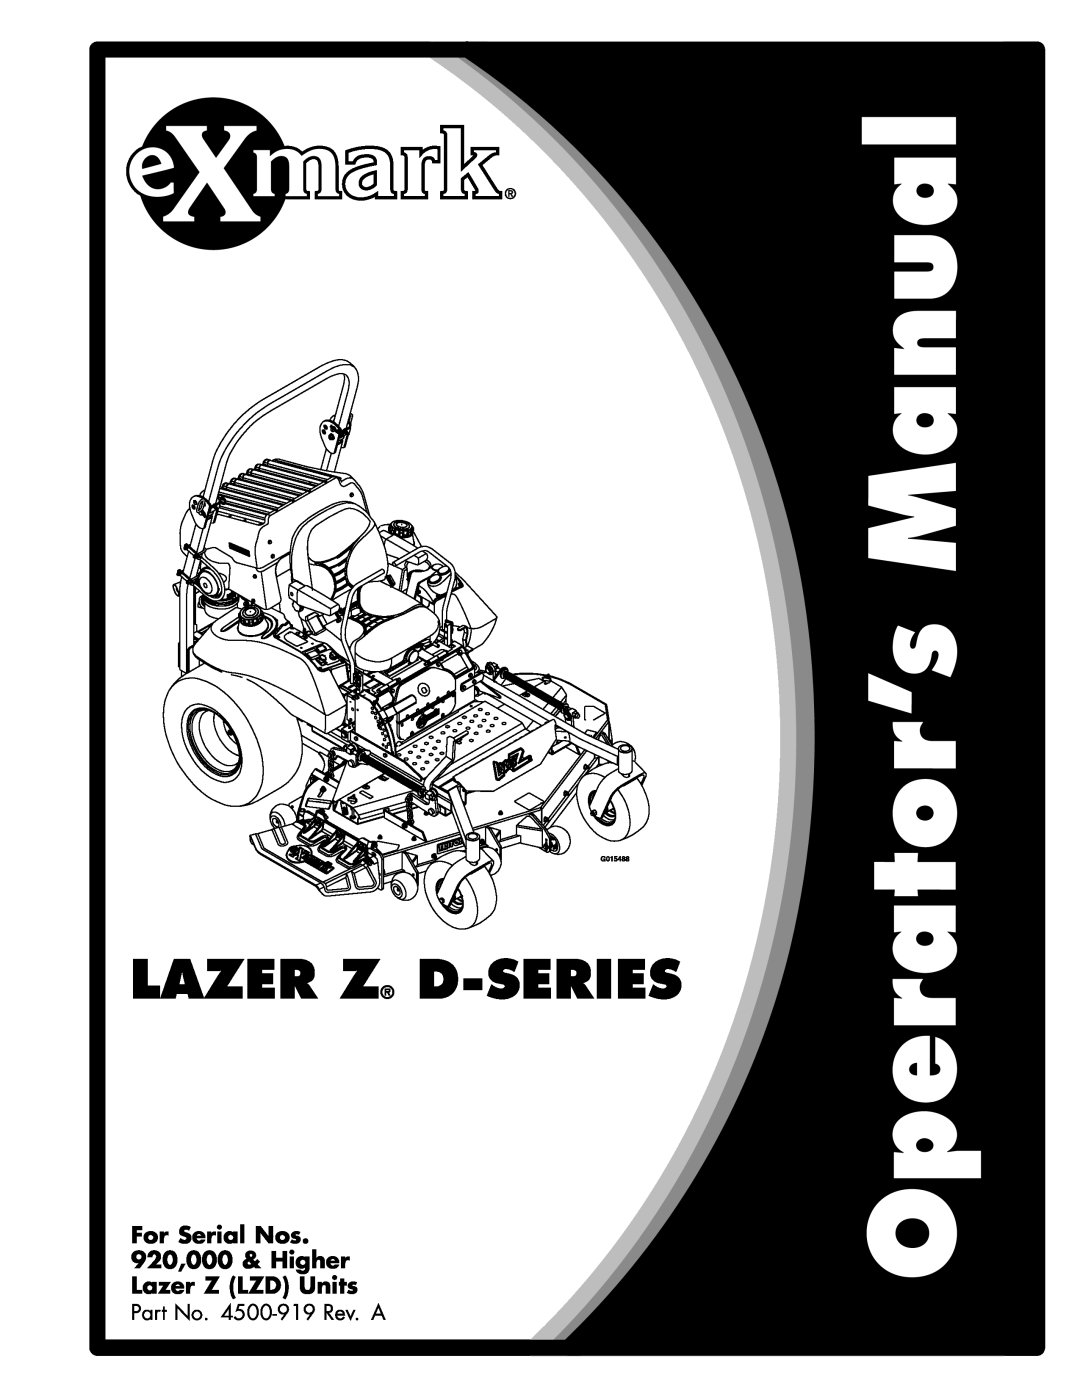 Exmark 000 & higher manual Lazer Z Advantage Series Models, For Serial Nos 790,000 & Higher, Part No. 4500-509Rev. B 